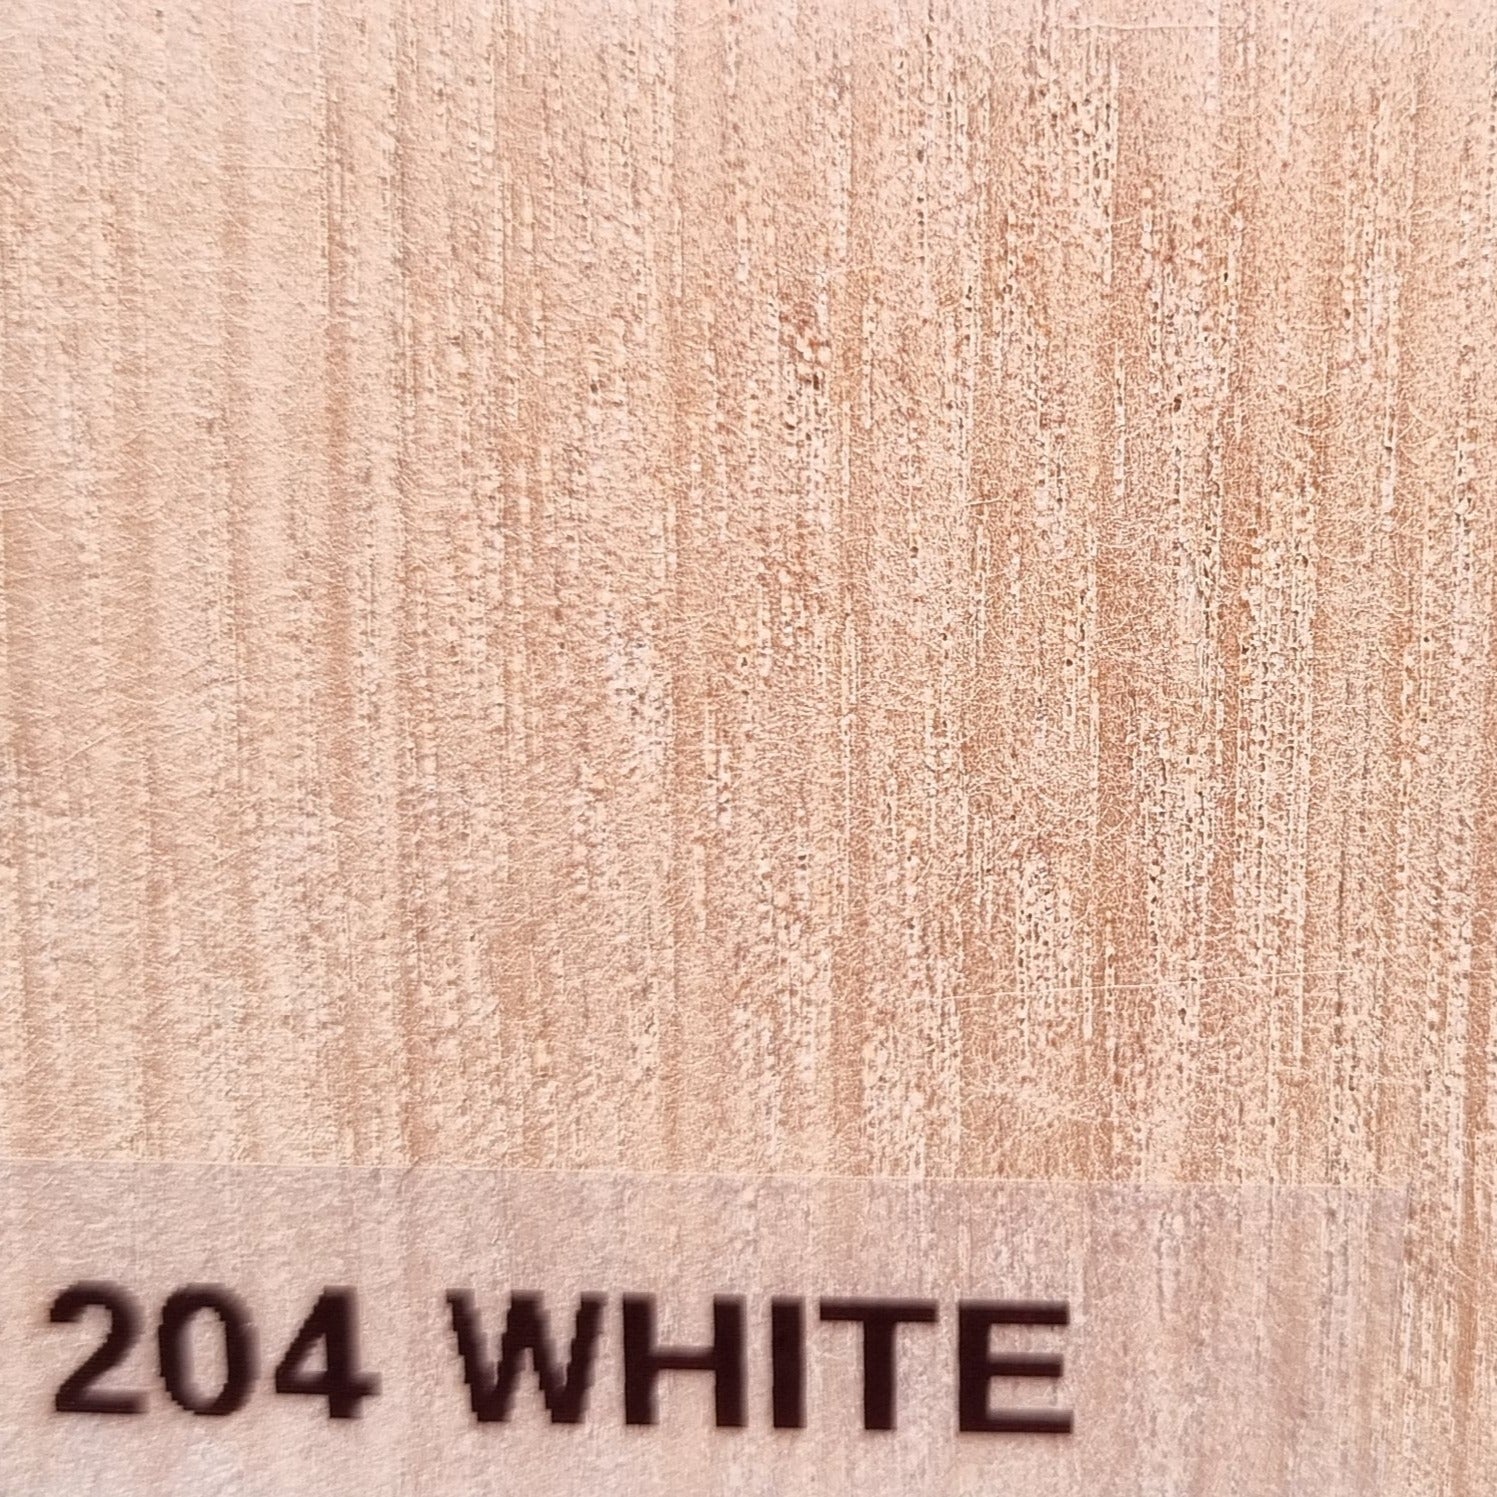 204 - White